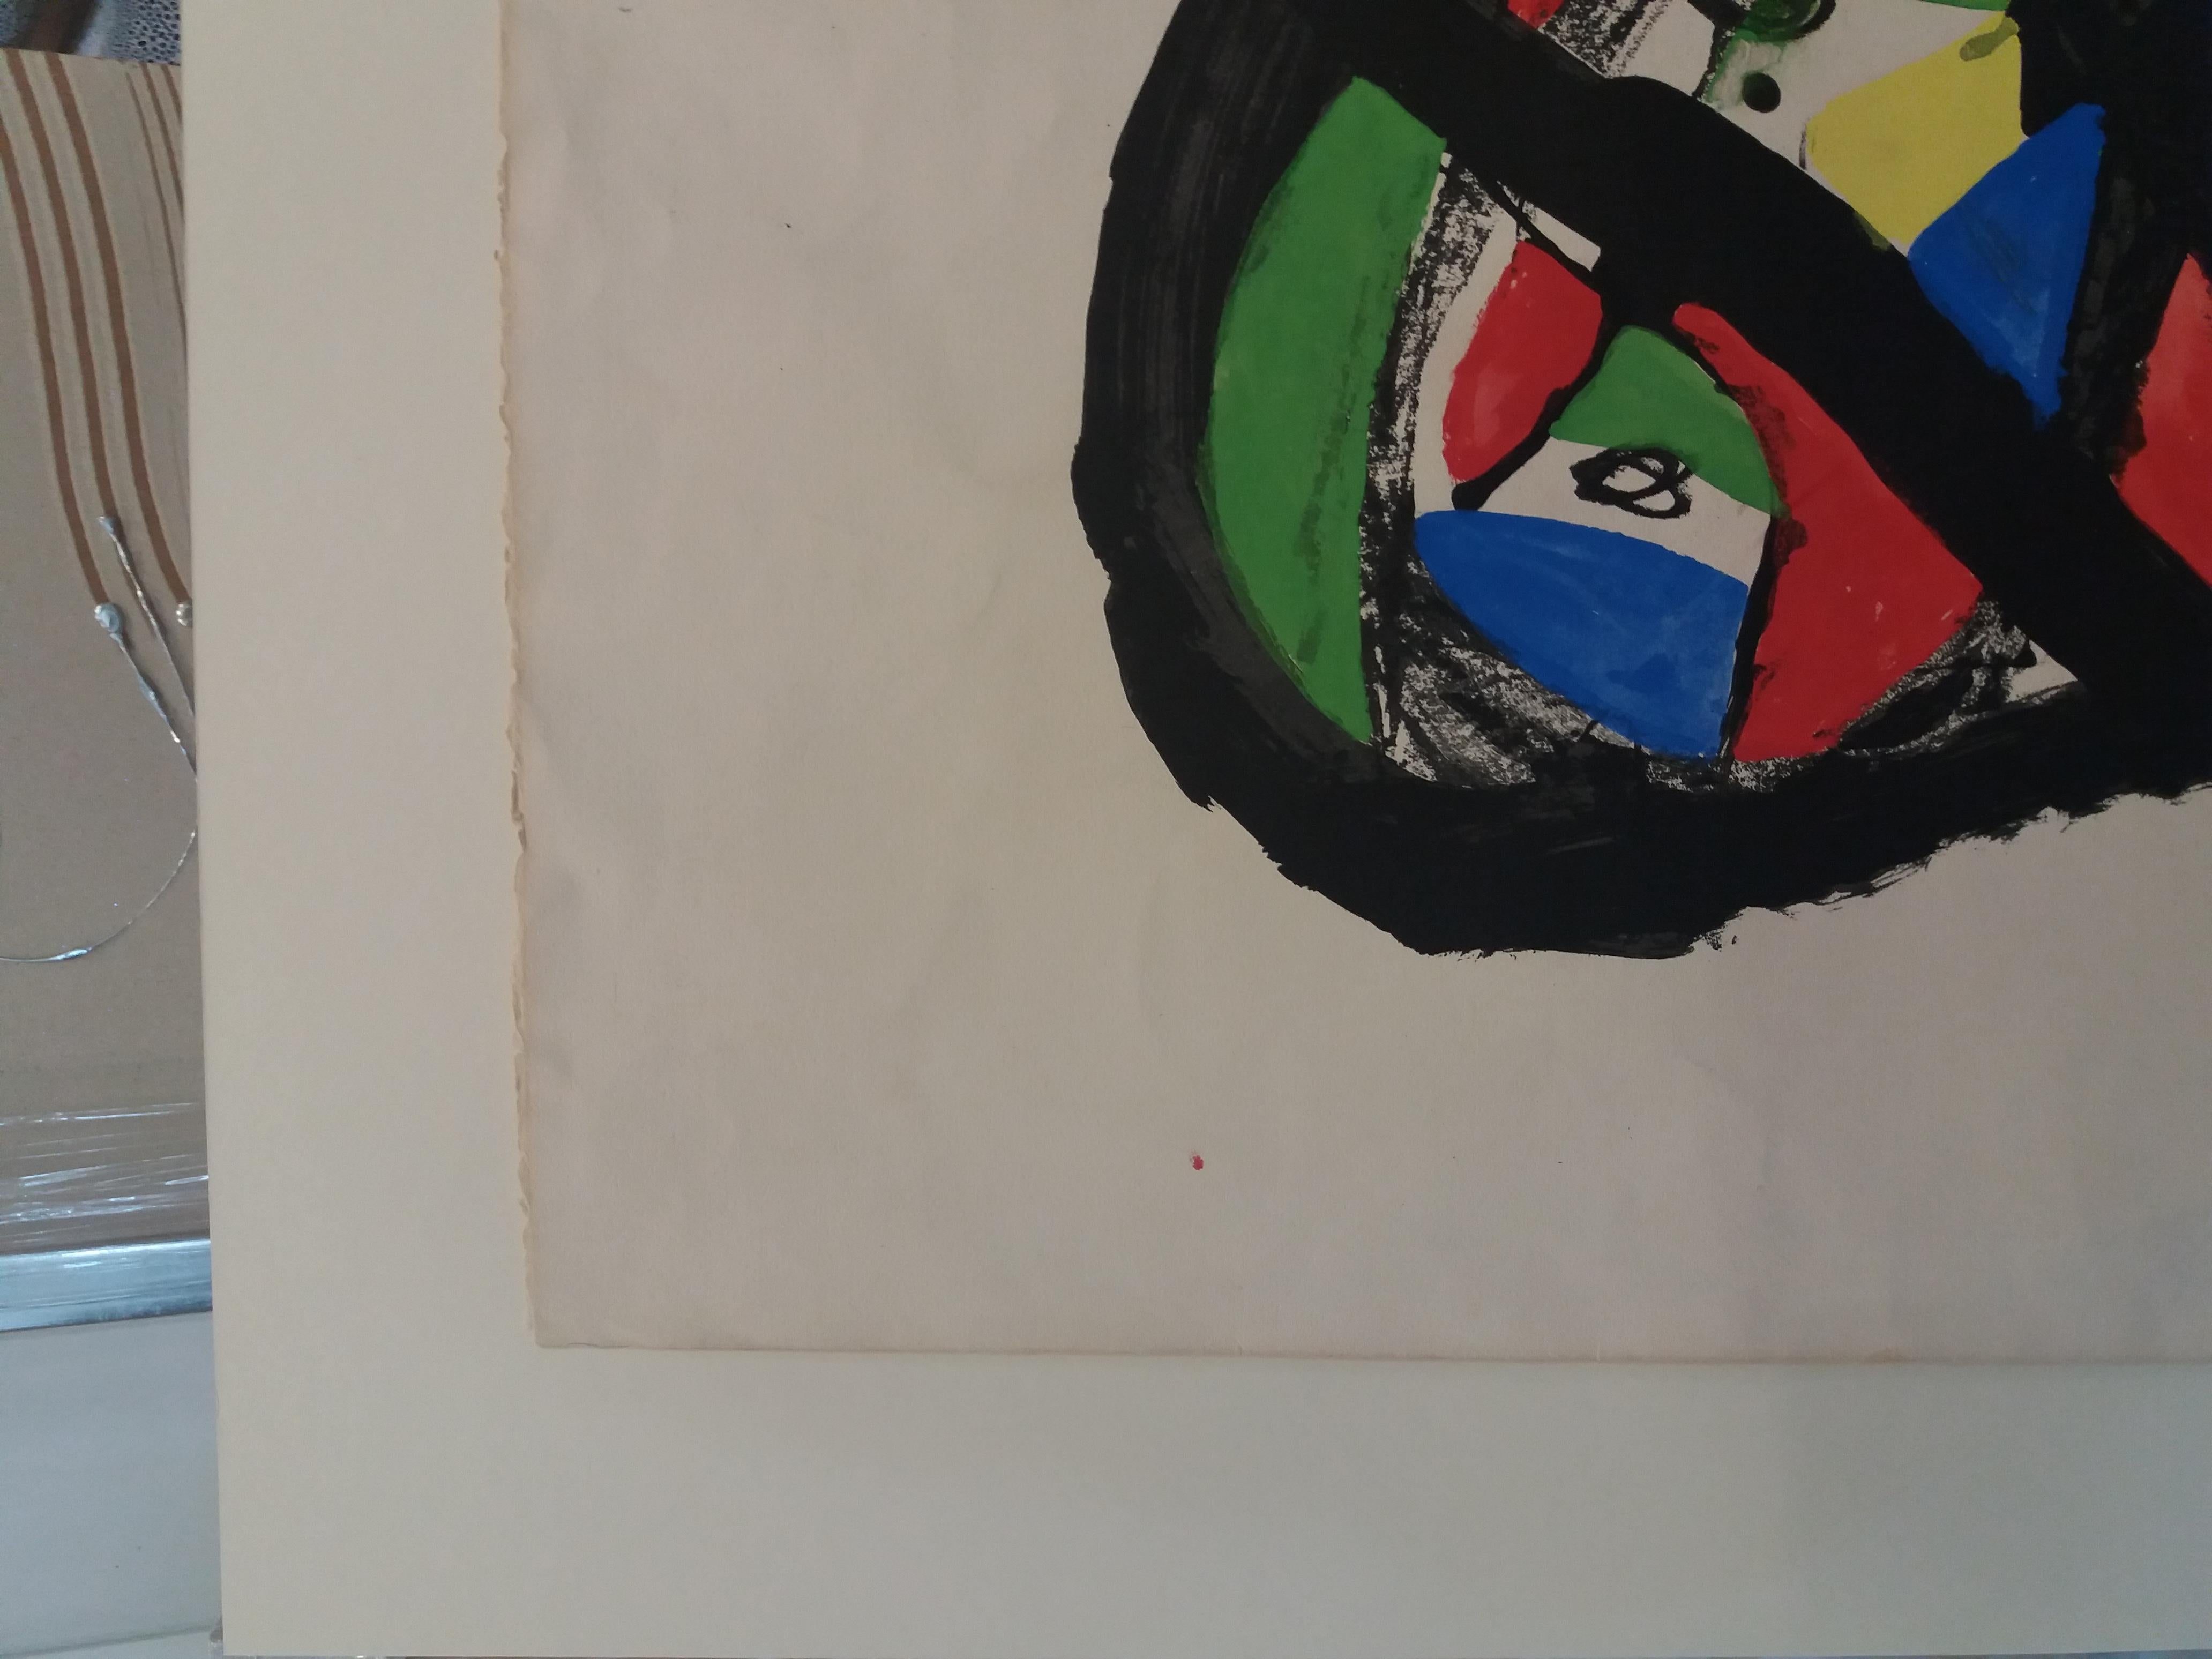 Joan Miro. Original single piece mixed technique painting
Joan Miro Ferra
1893-1983
Original Study for “EL GOLAFRE 